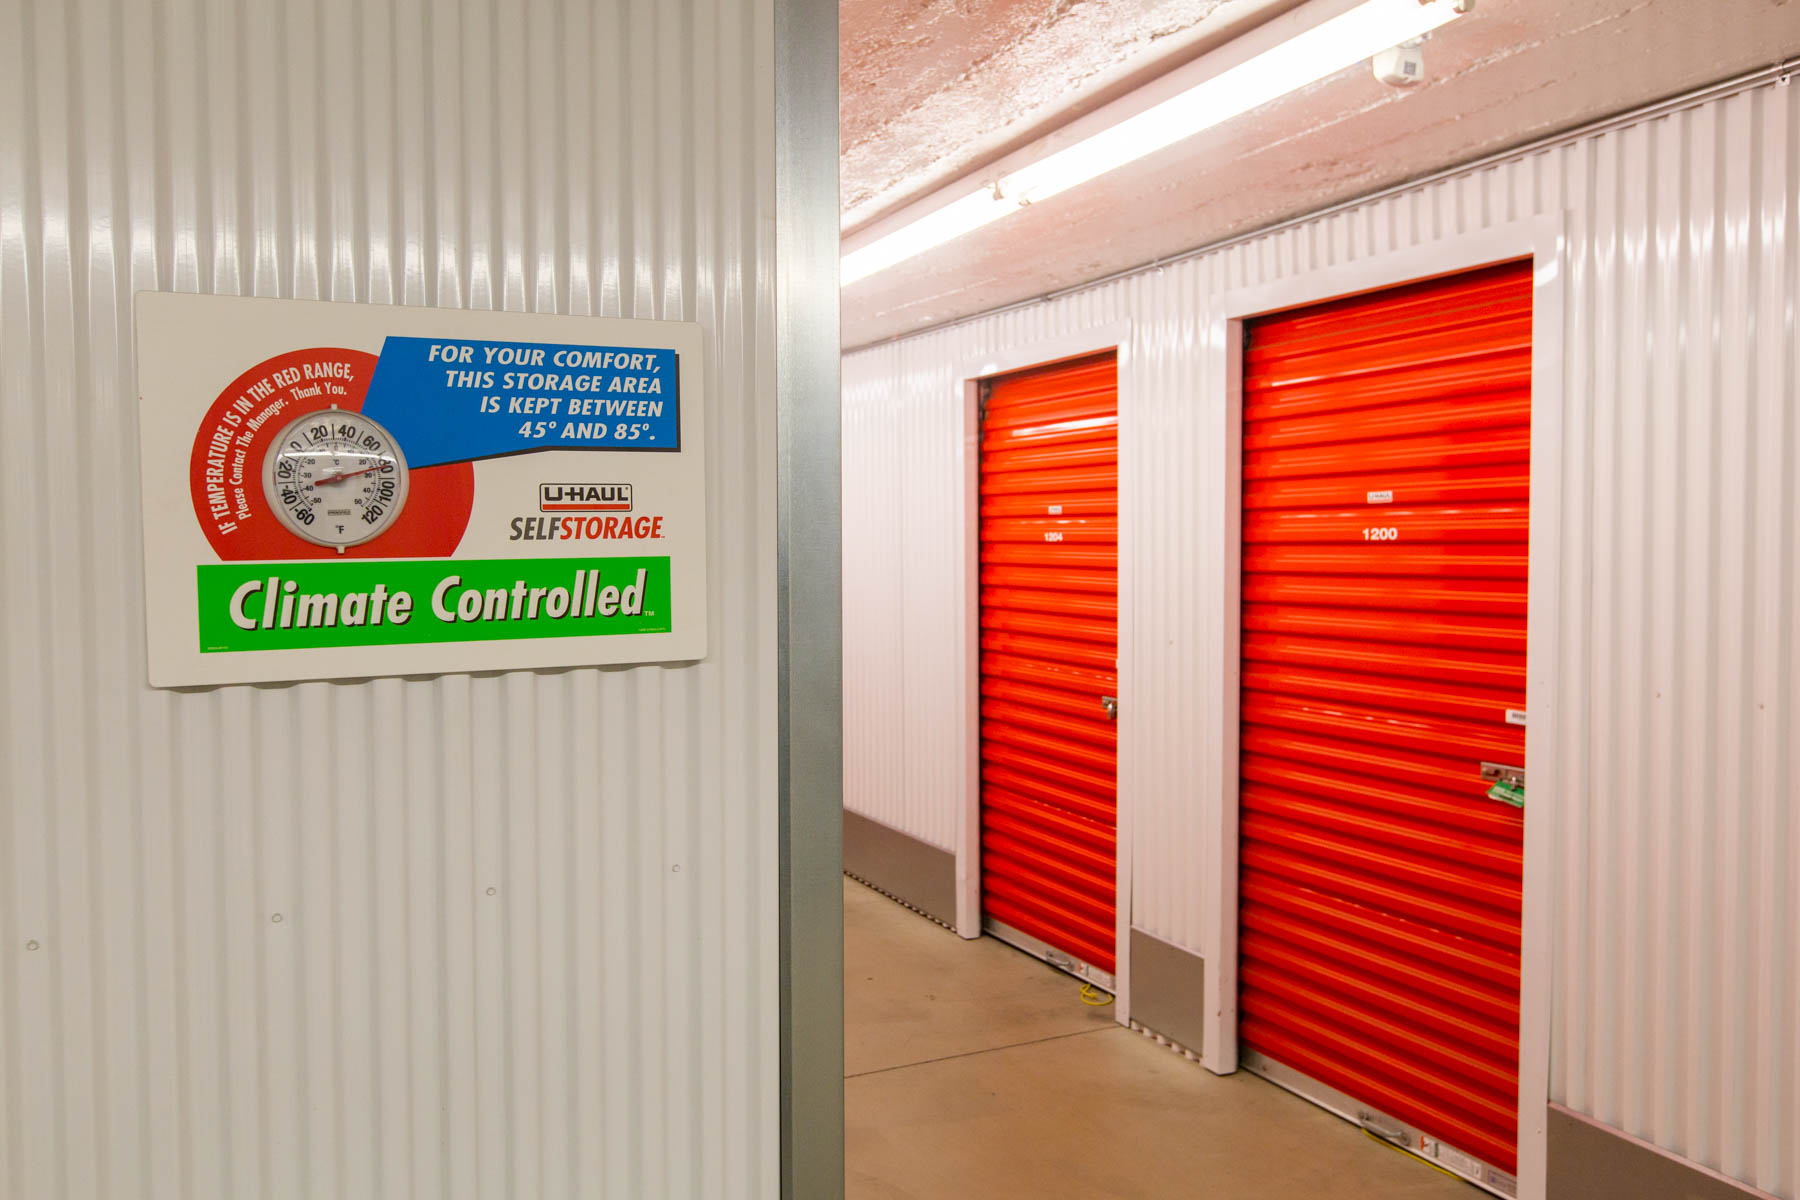 Mesquite Heat Fire Relief: U-Haul Offers 30 Days Free Storage to Evacuees